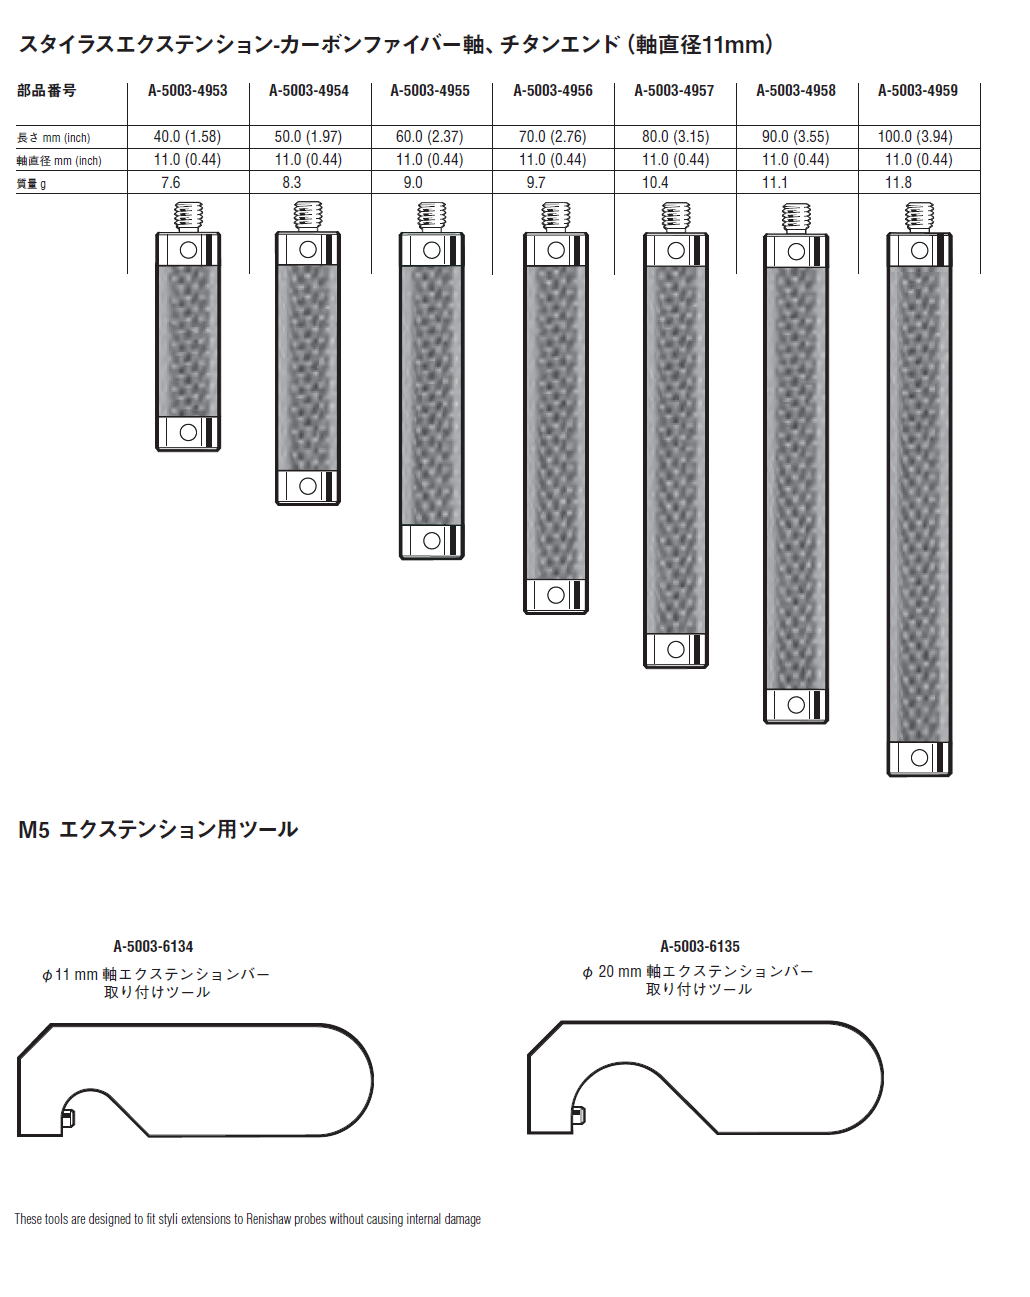 RENISHAW レニショー M5 ネジ径スタイラスシリーズ三次元測定機 